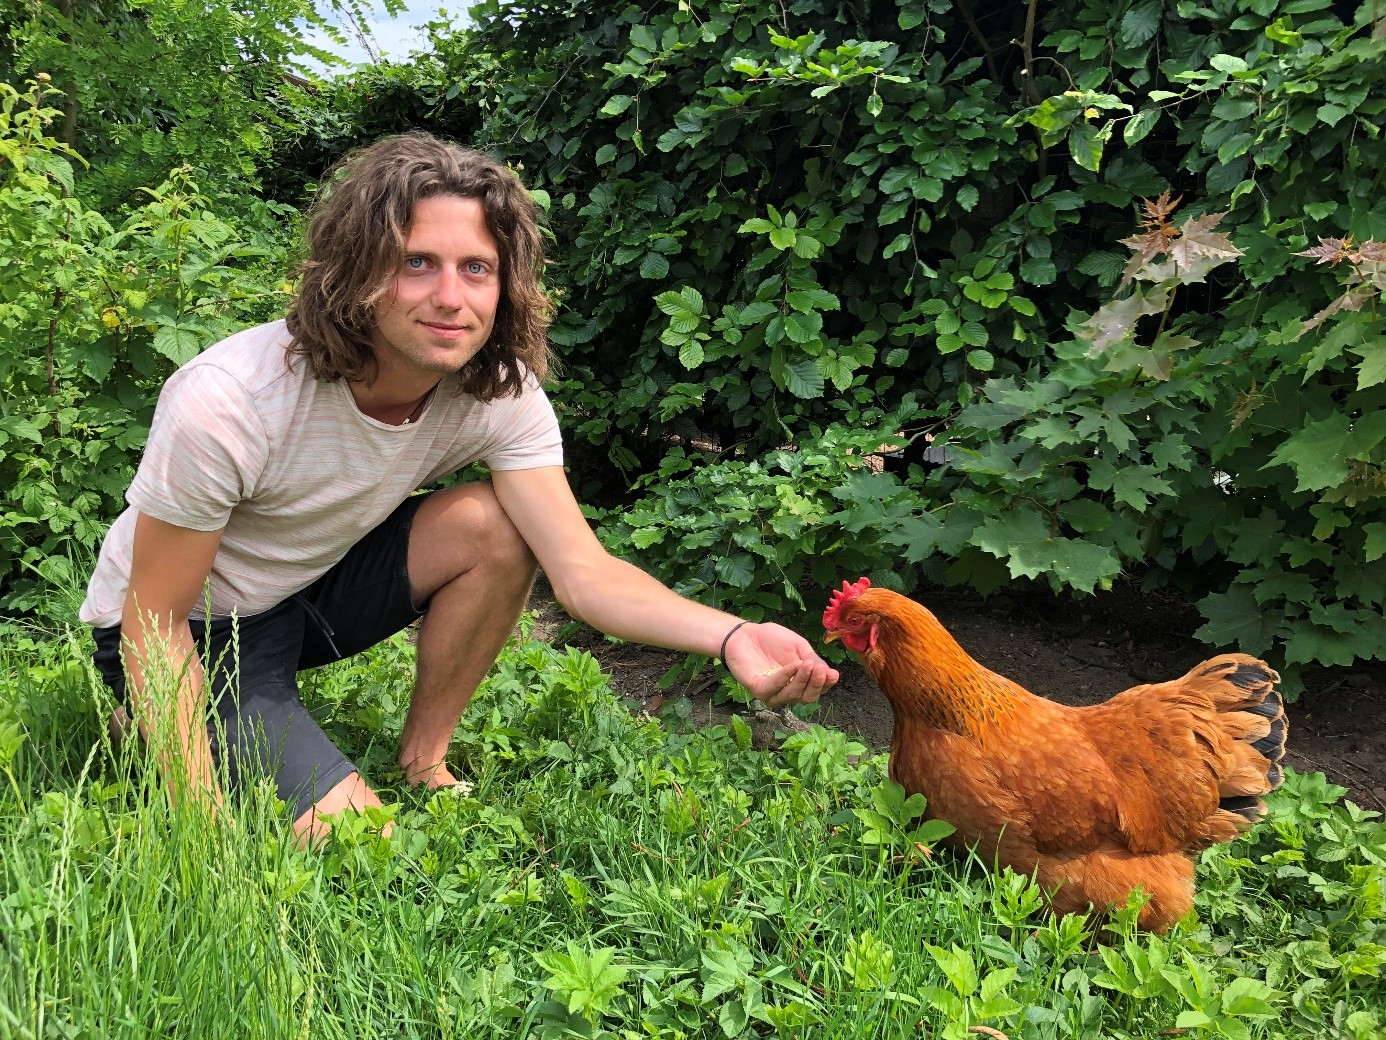 Unusual side jobs: vegan helps cull chickens